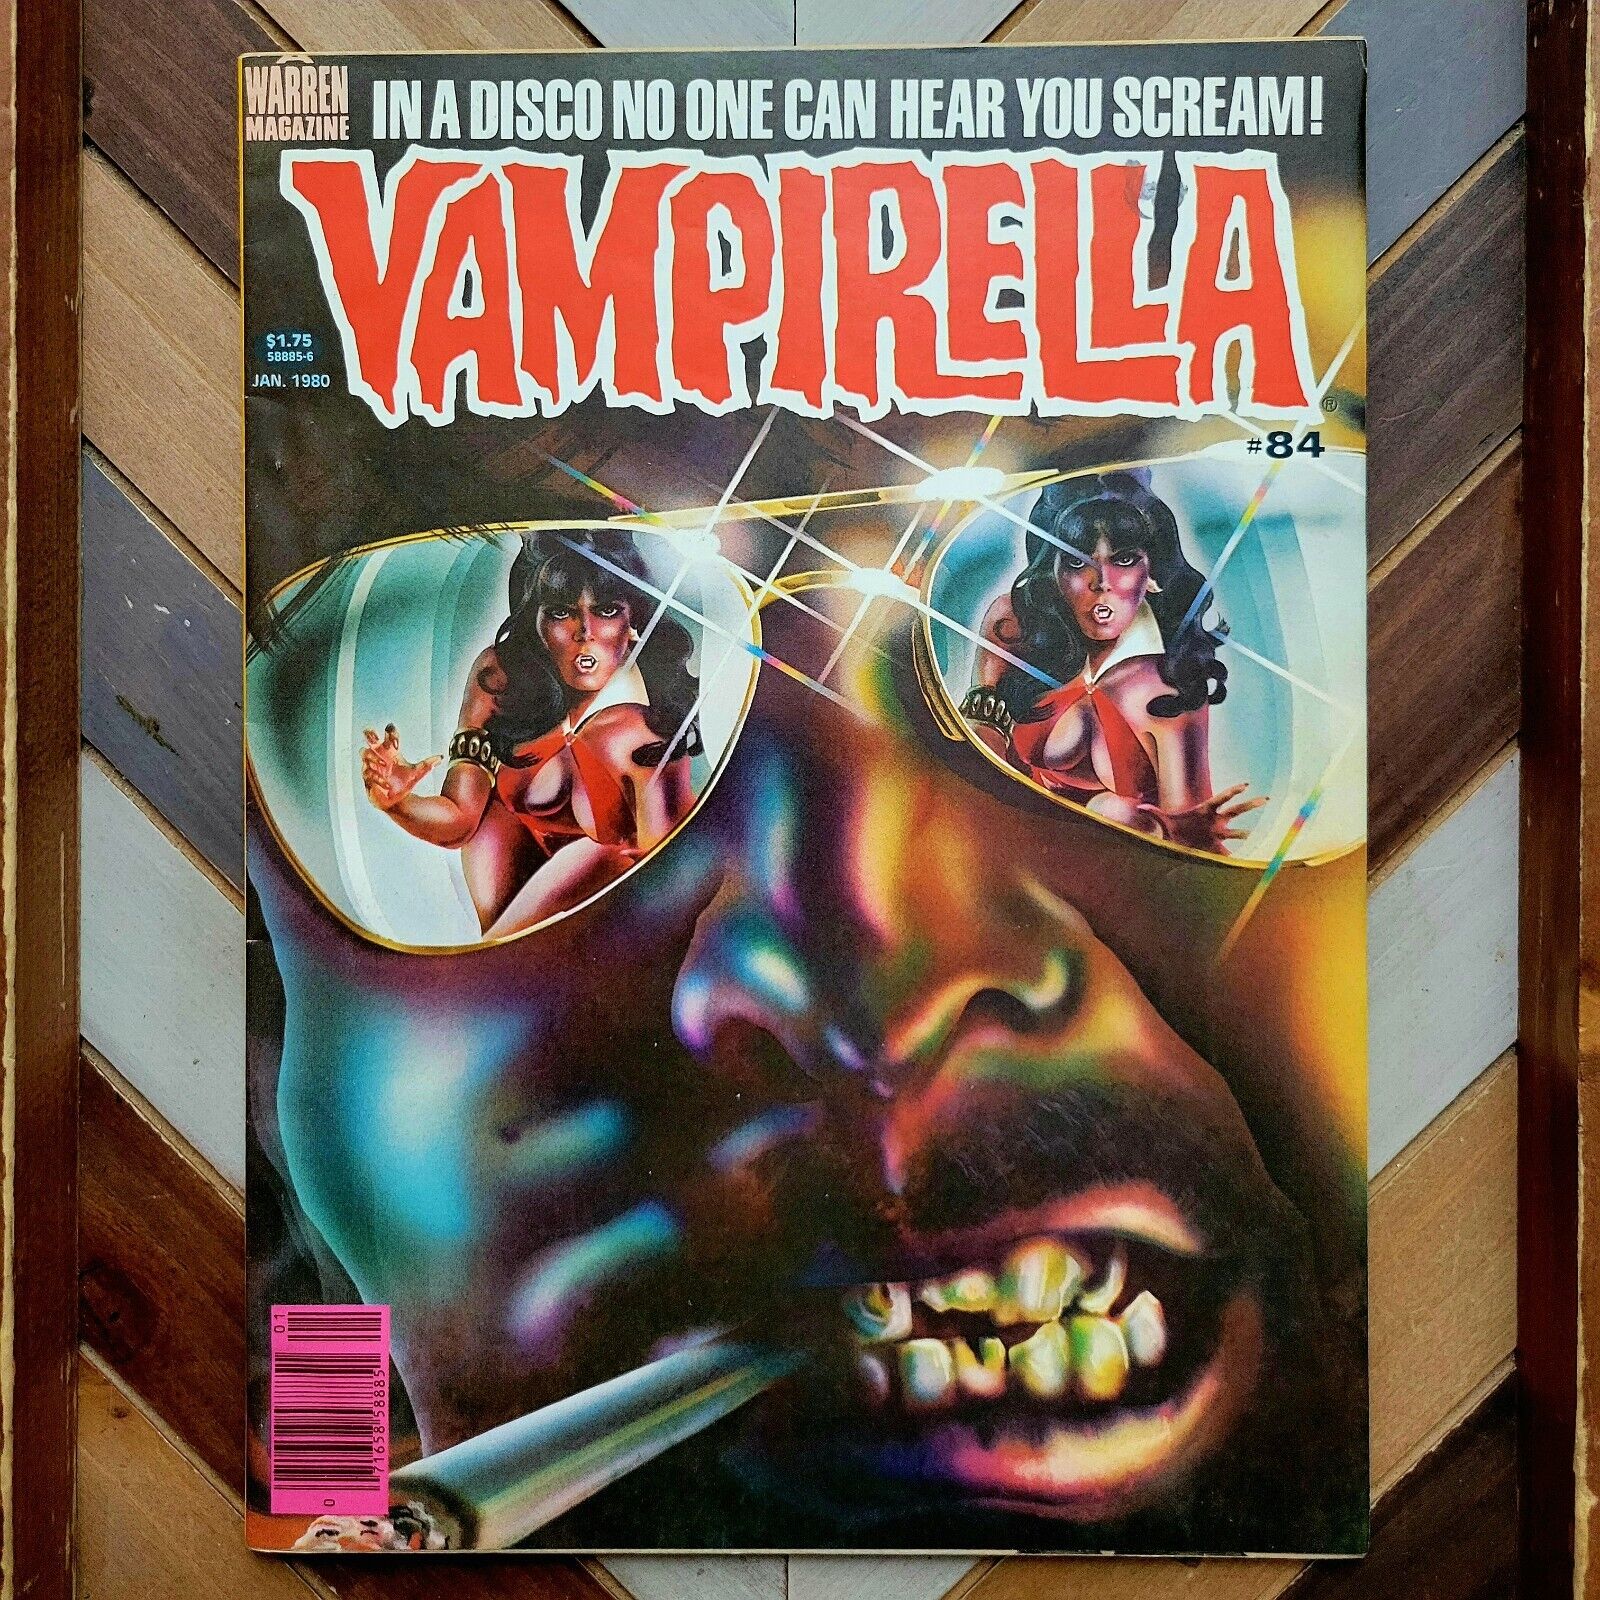 VAMPIRELLA #84 FN (Warren 1980) 1st Series NEBRES/PIZARRO ART Steve Harris Cover